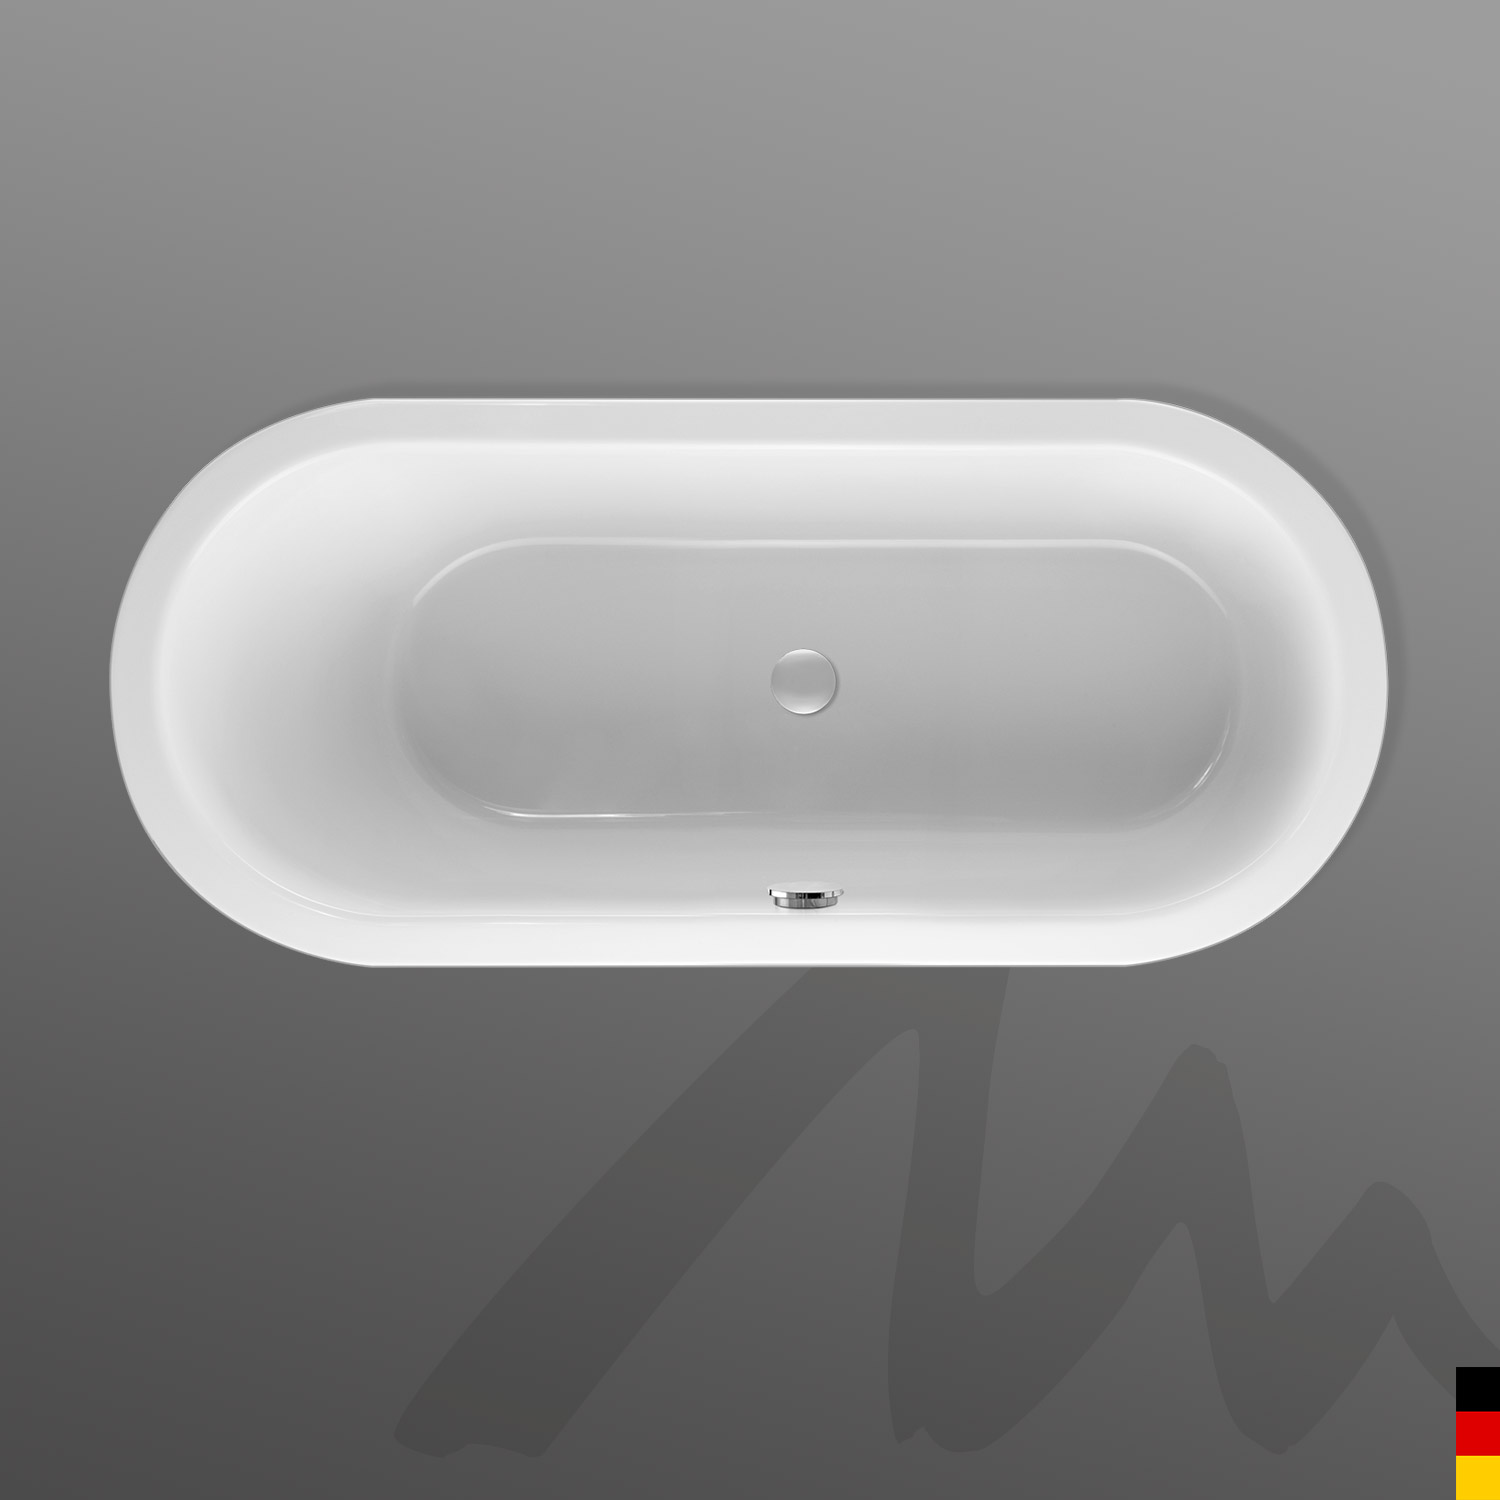 Mauersberger Badewanne Oval Crispa 170/75 uno  170x75x44cm  Farbe:rein-weiß